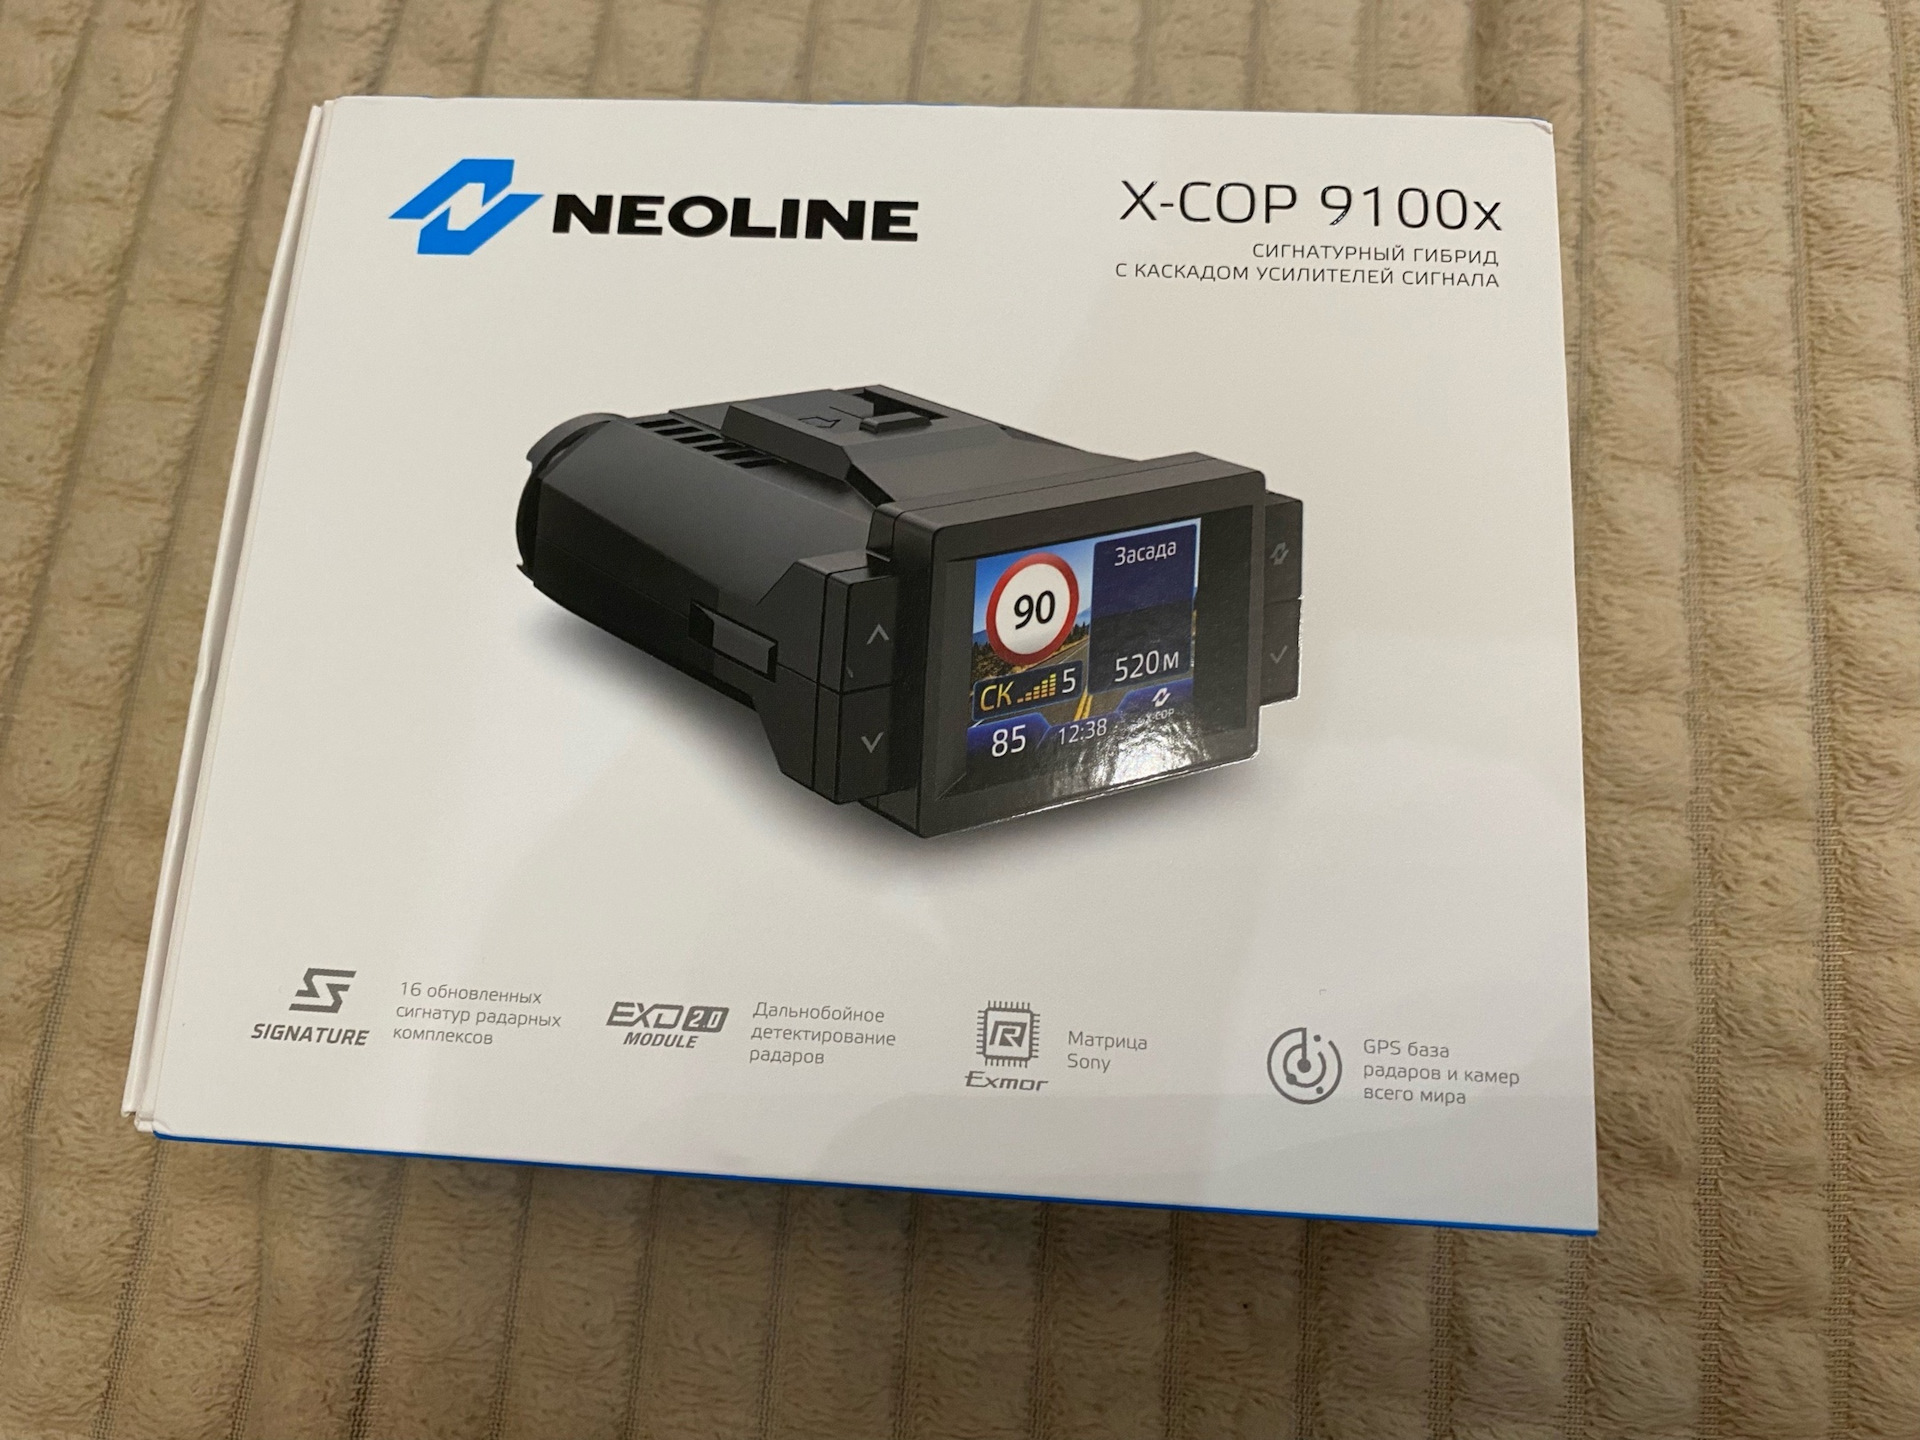 Neoline x cop 9100c. Neoline x-cop 9100x. Сигнатурный гибрид Neoline x-cop 9100x. Neoline x-cop 9100. Neoline x-cop 9100s обновление базы радаров.